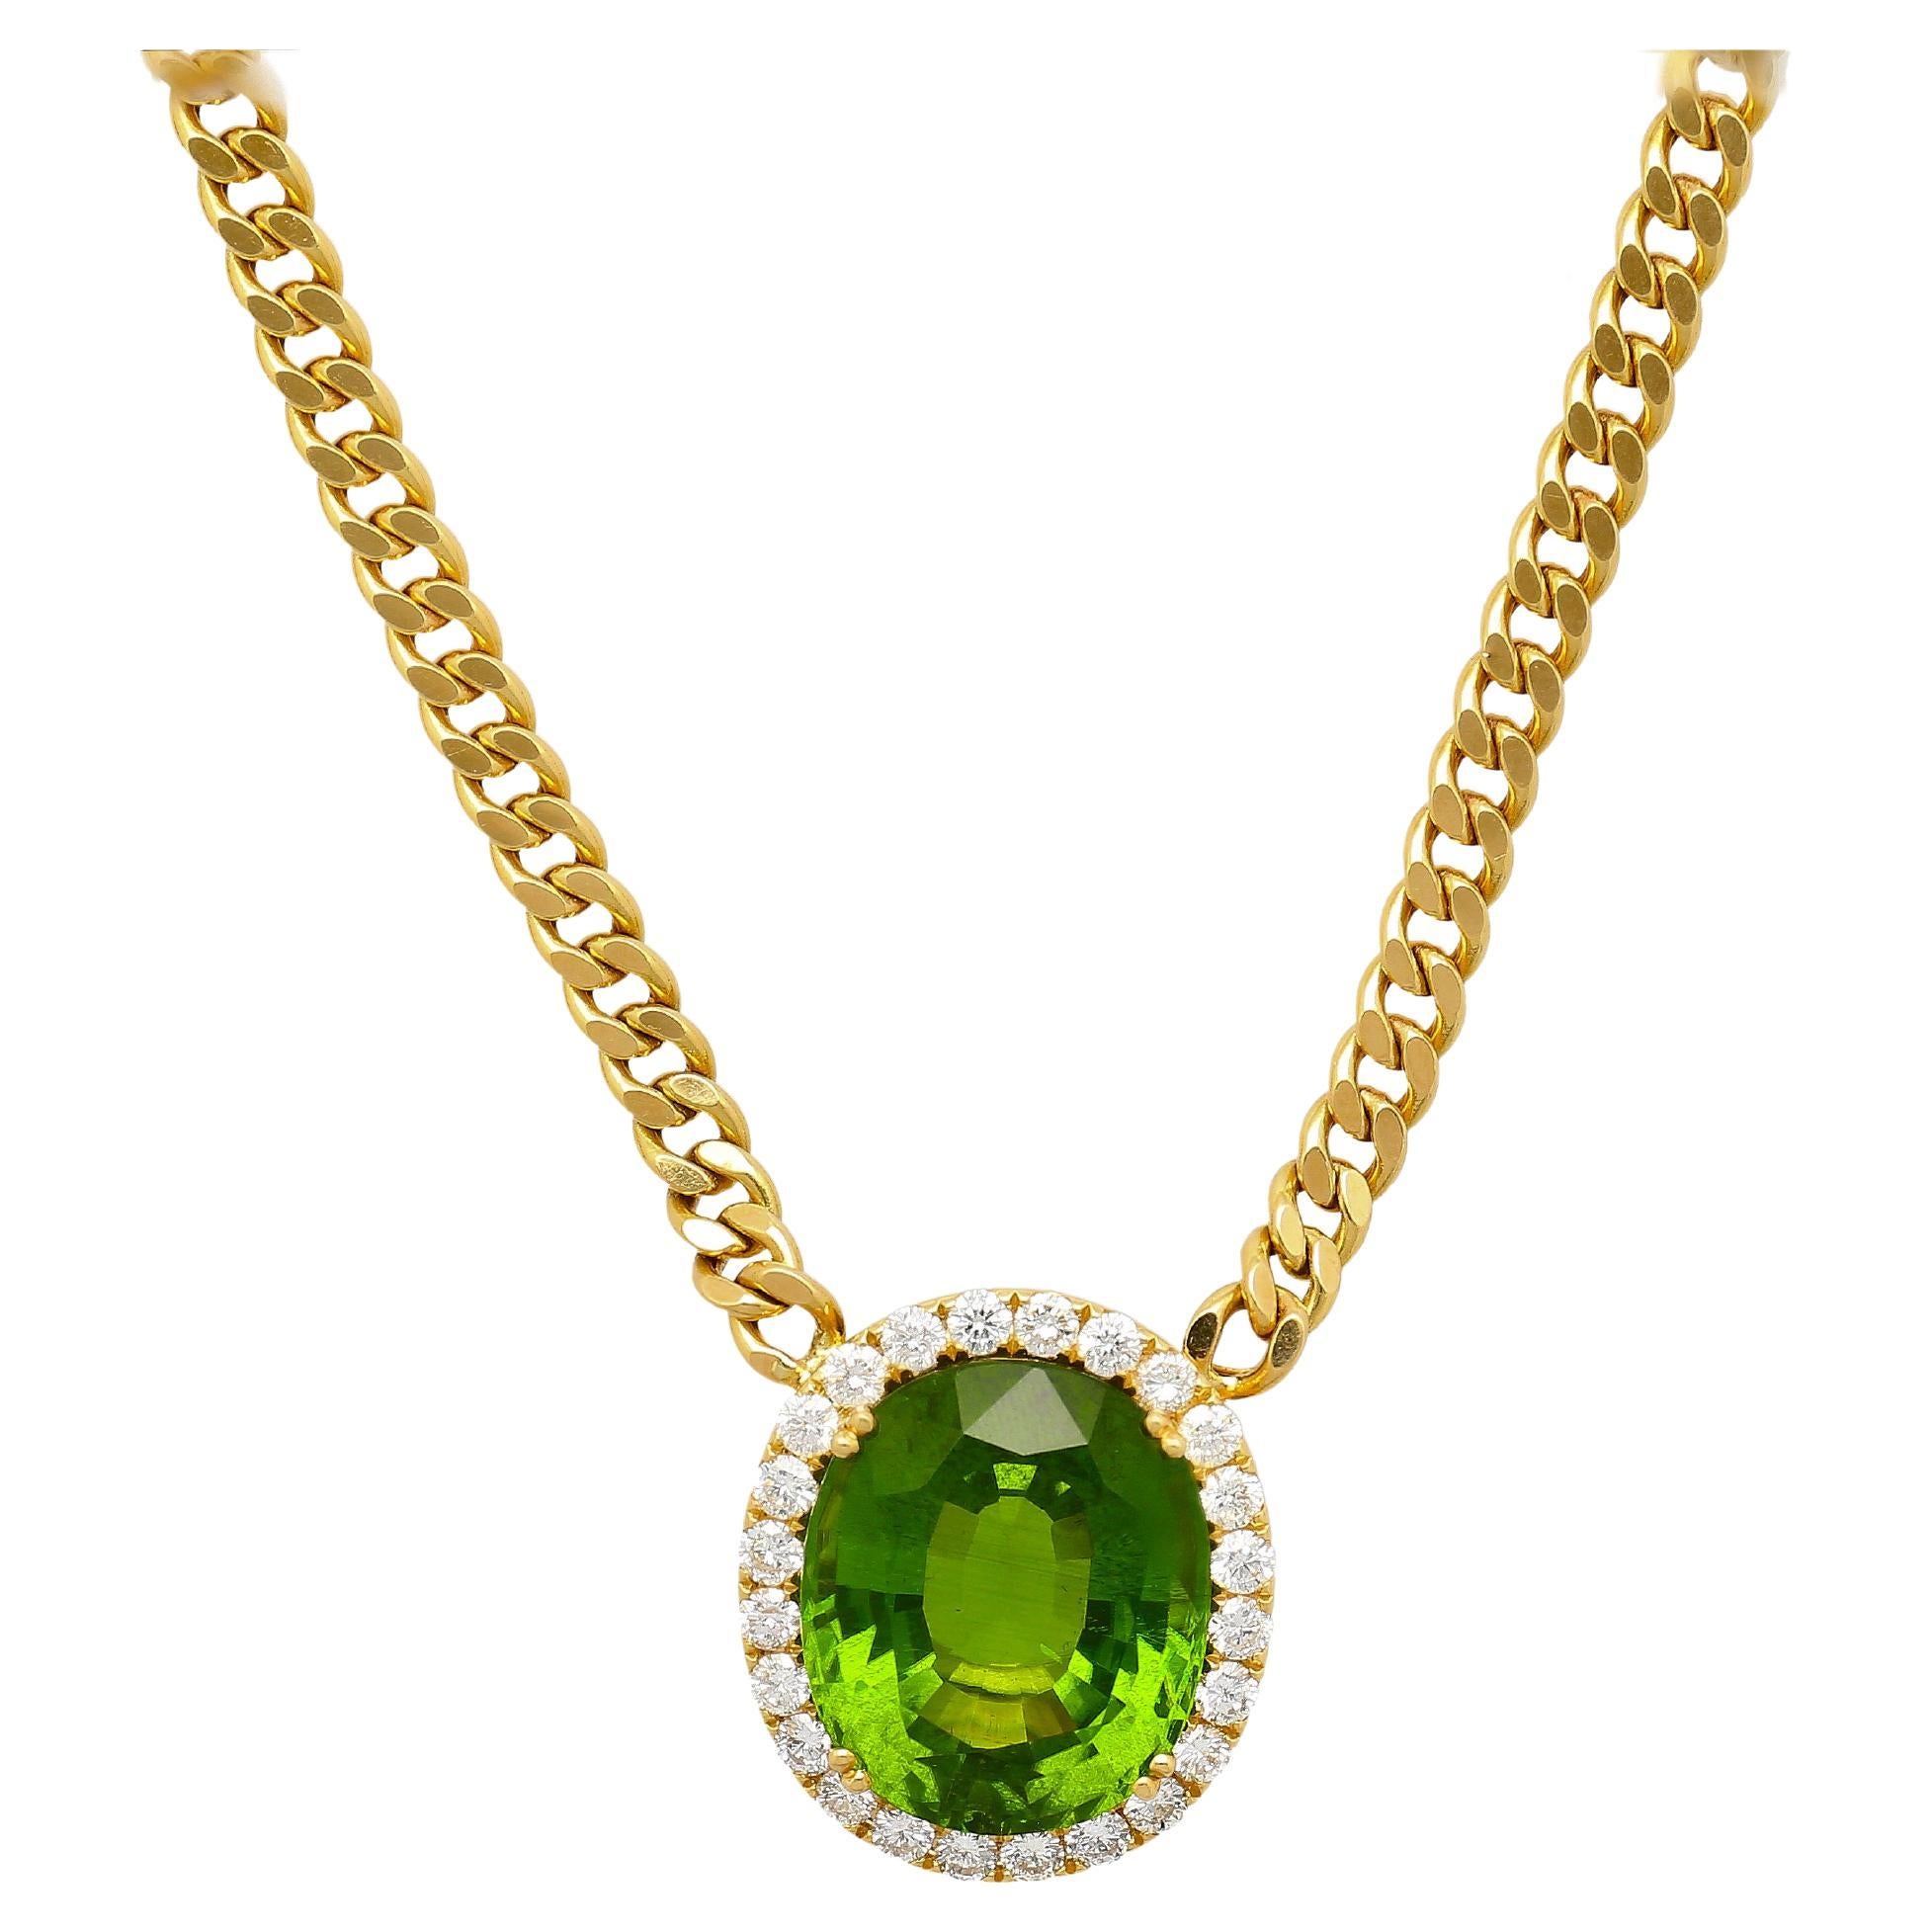 51 Carat Green Peridot Pendant with Diamond Halo in 18K Gold Cuban Chain For Sale